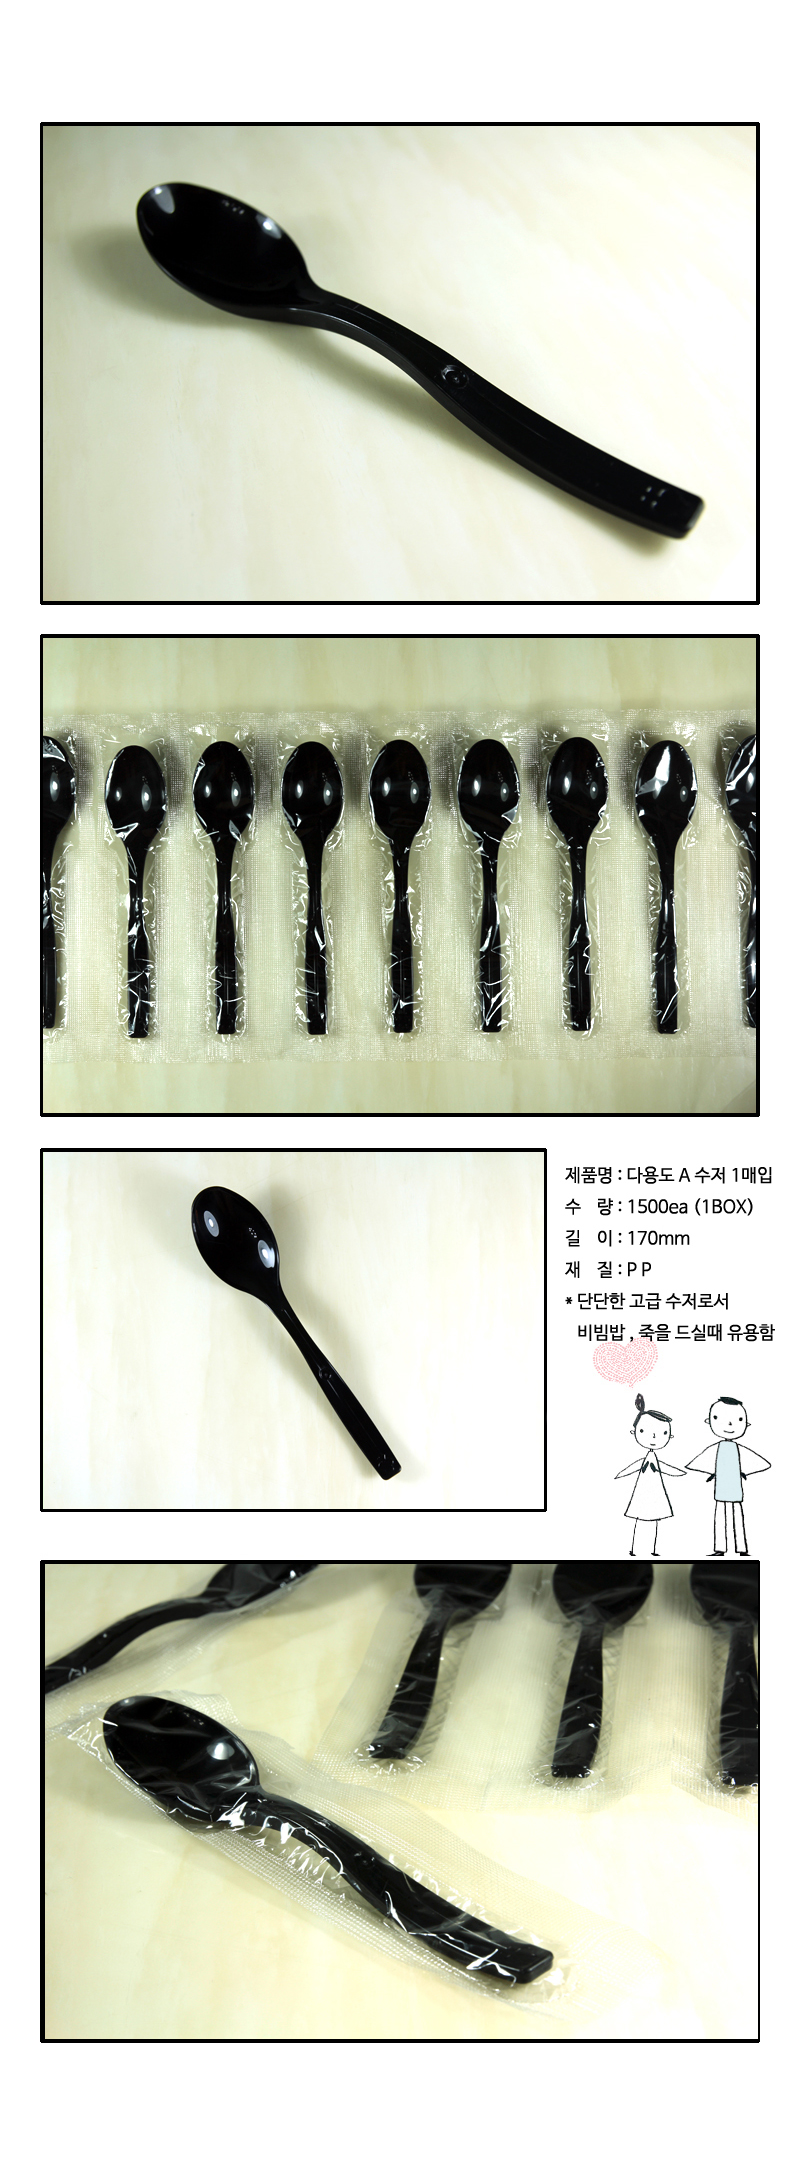 A_Black_Spoon